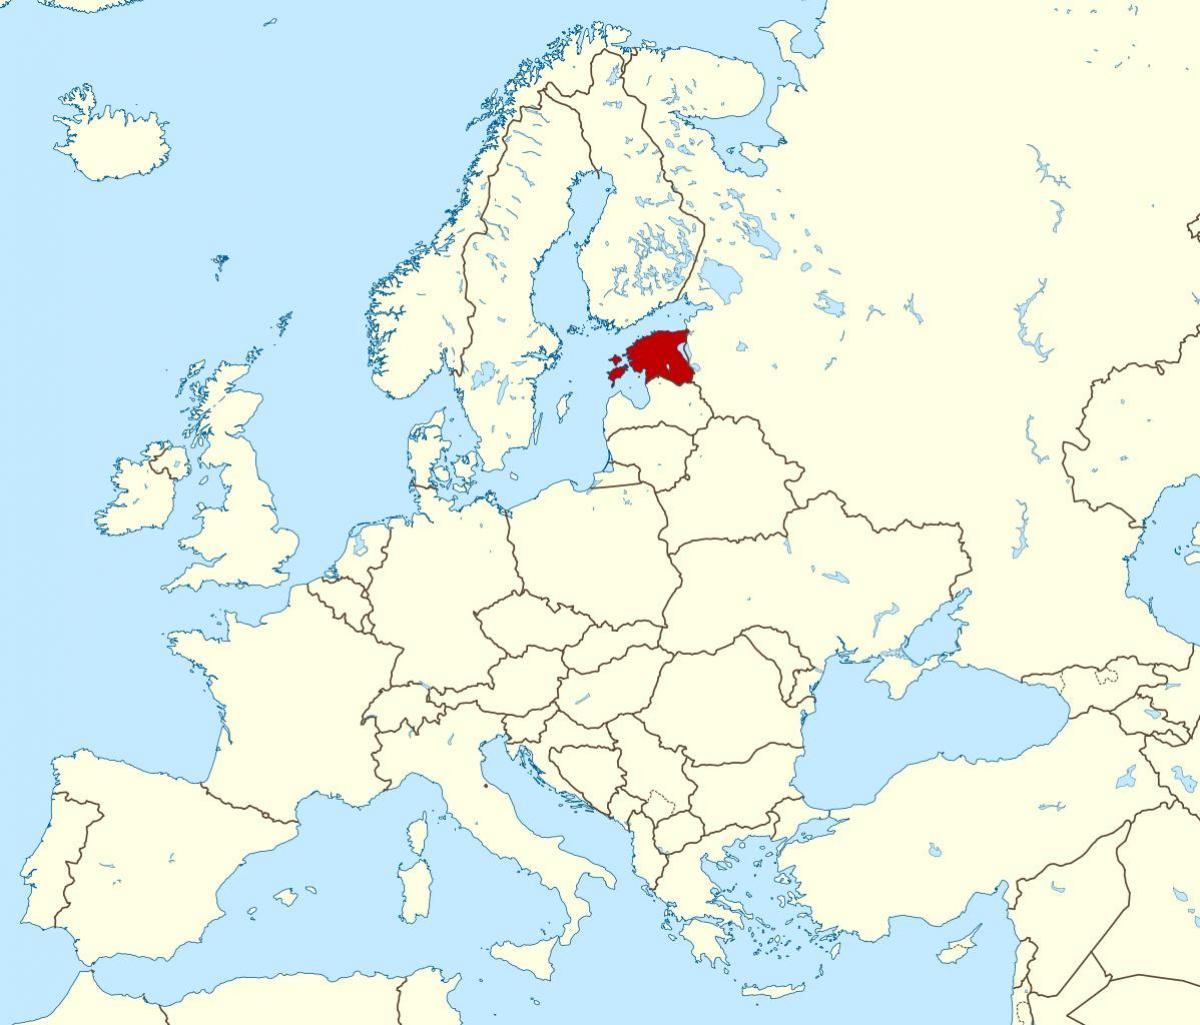 Estonia location on world map